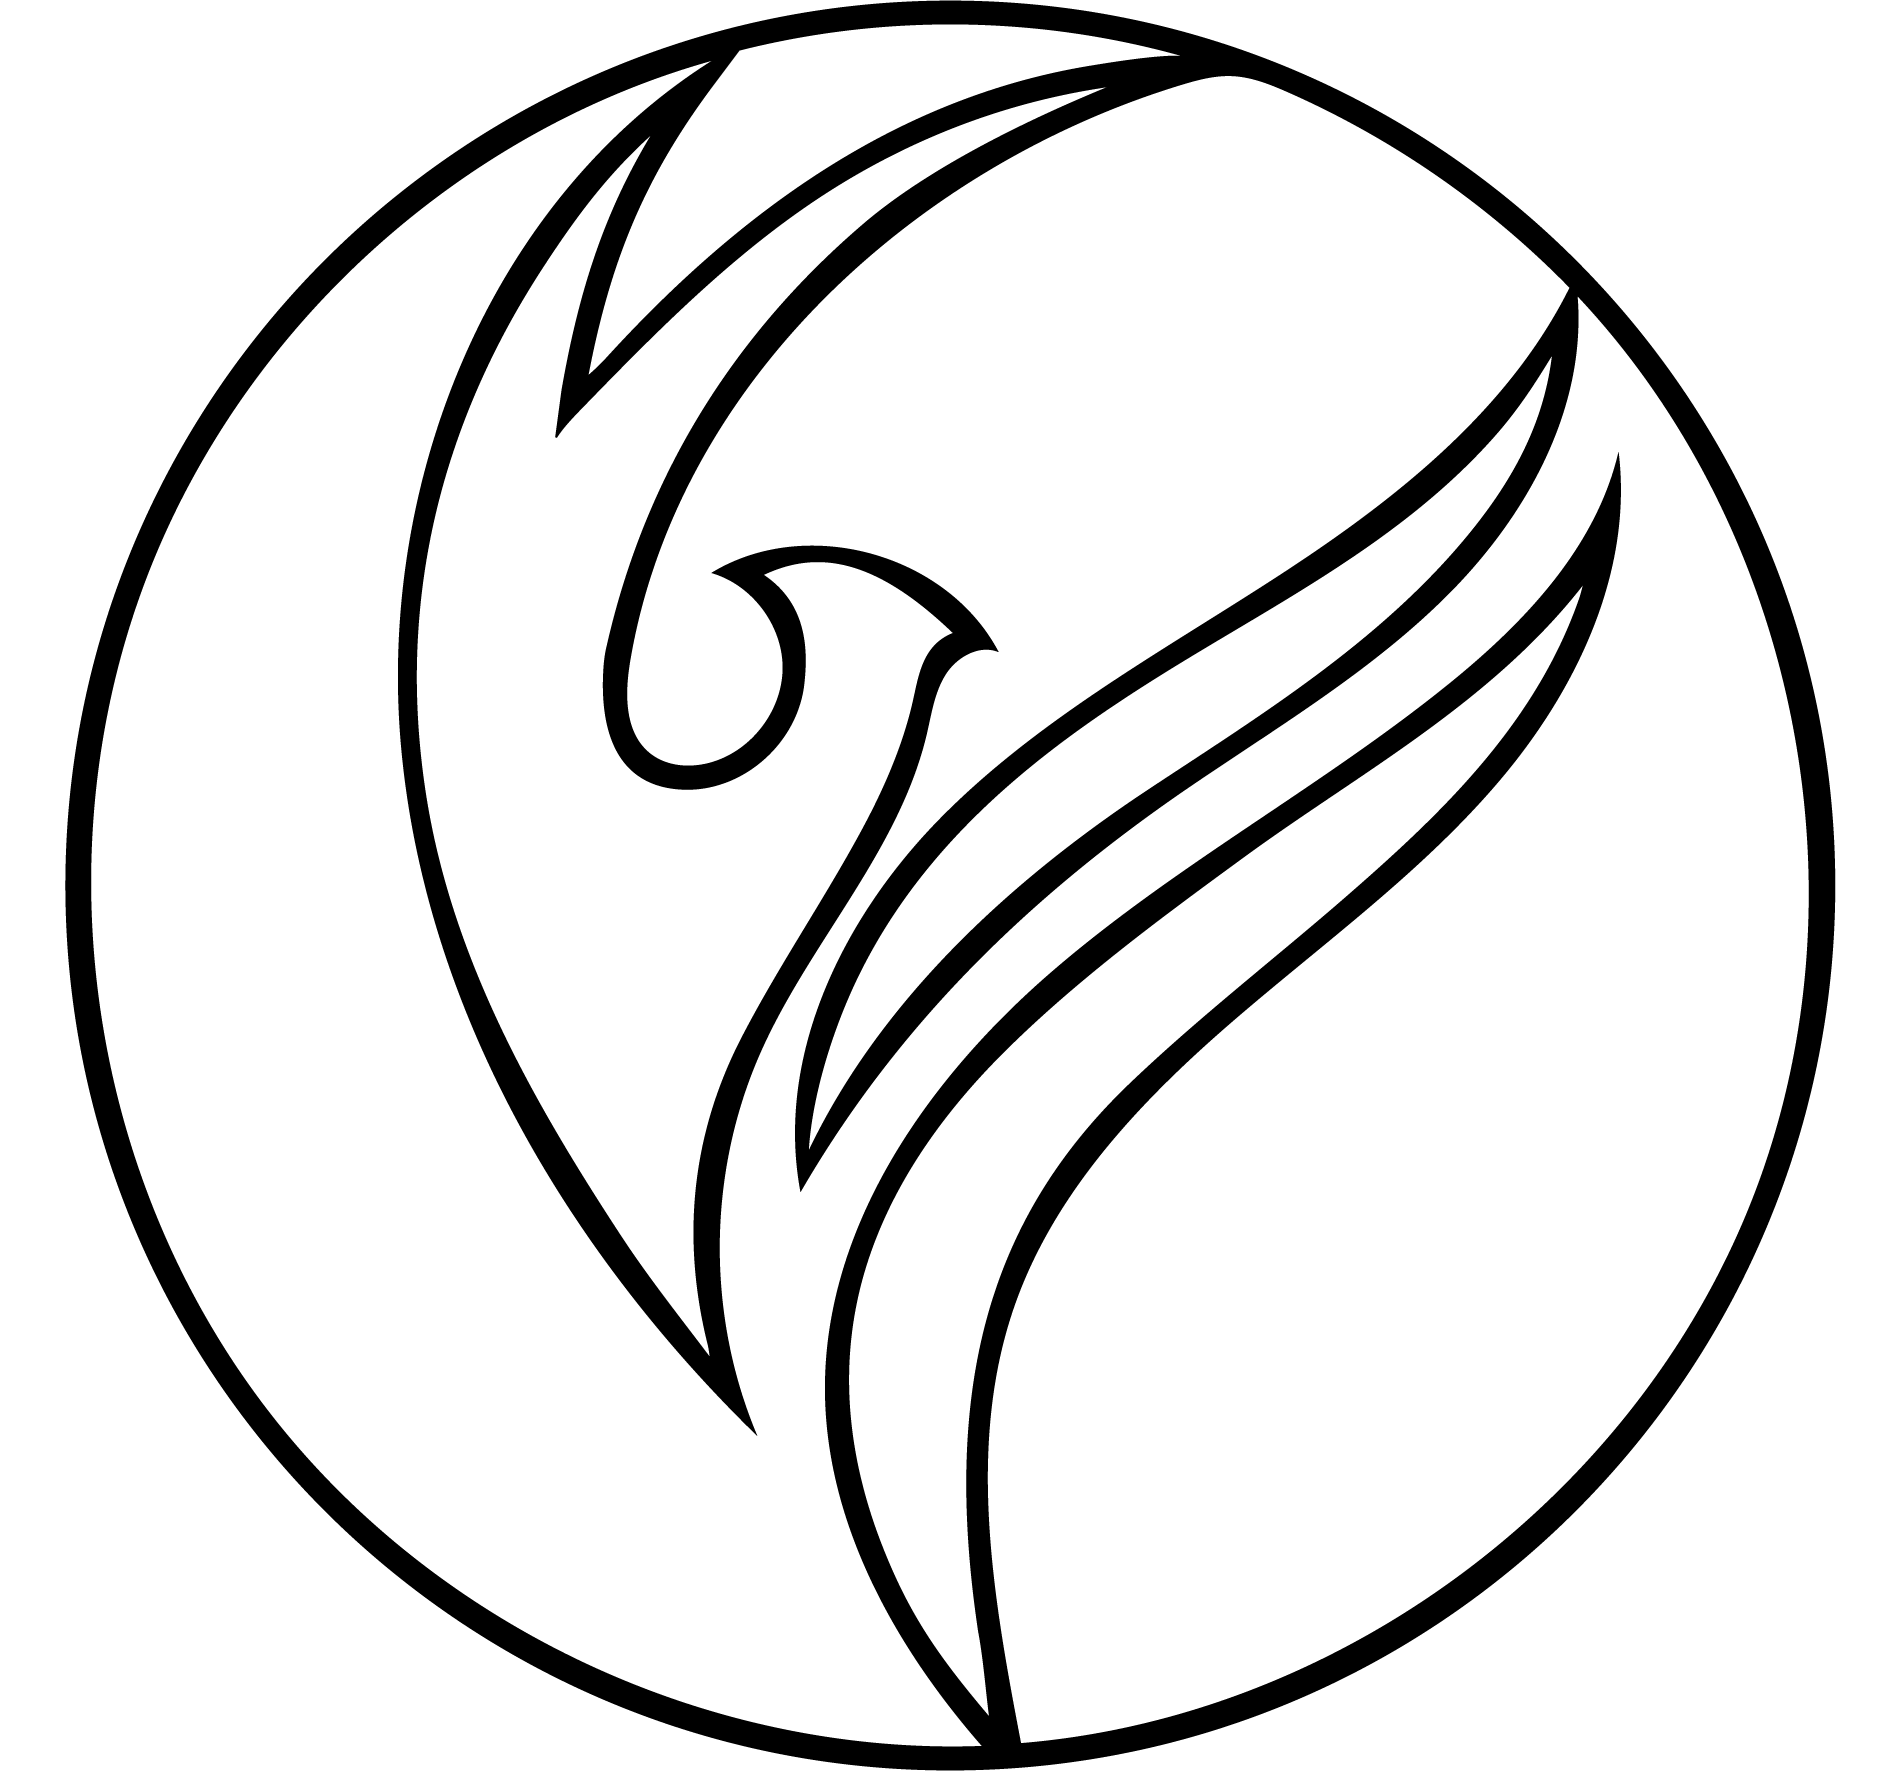 Peter_skjold_logo